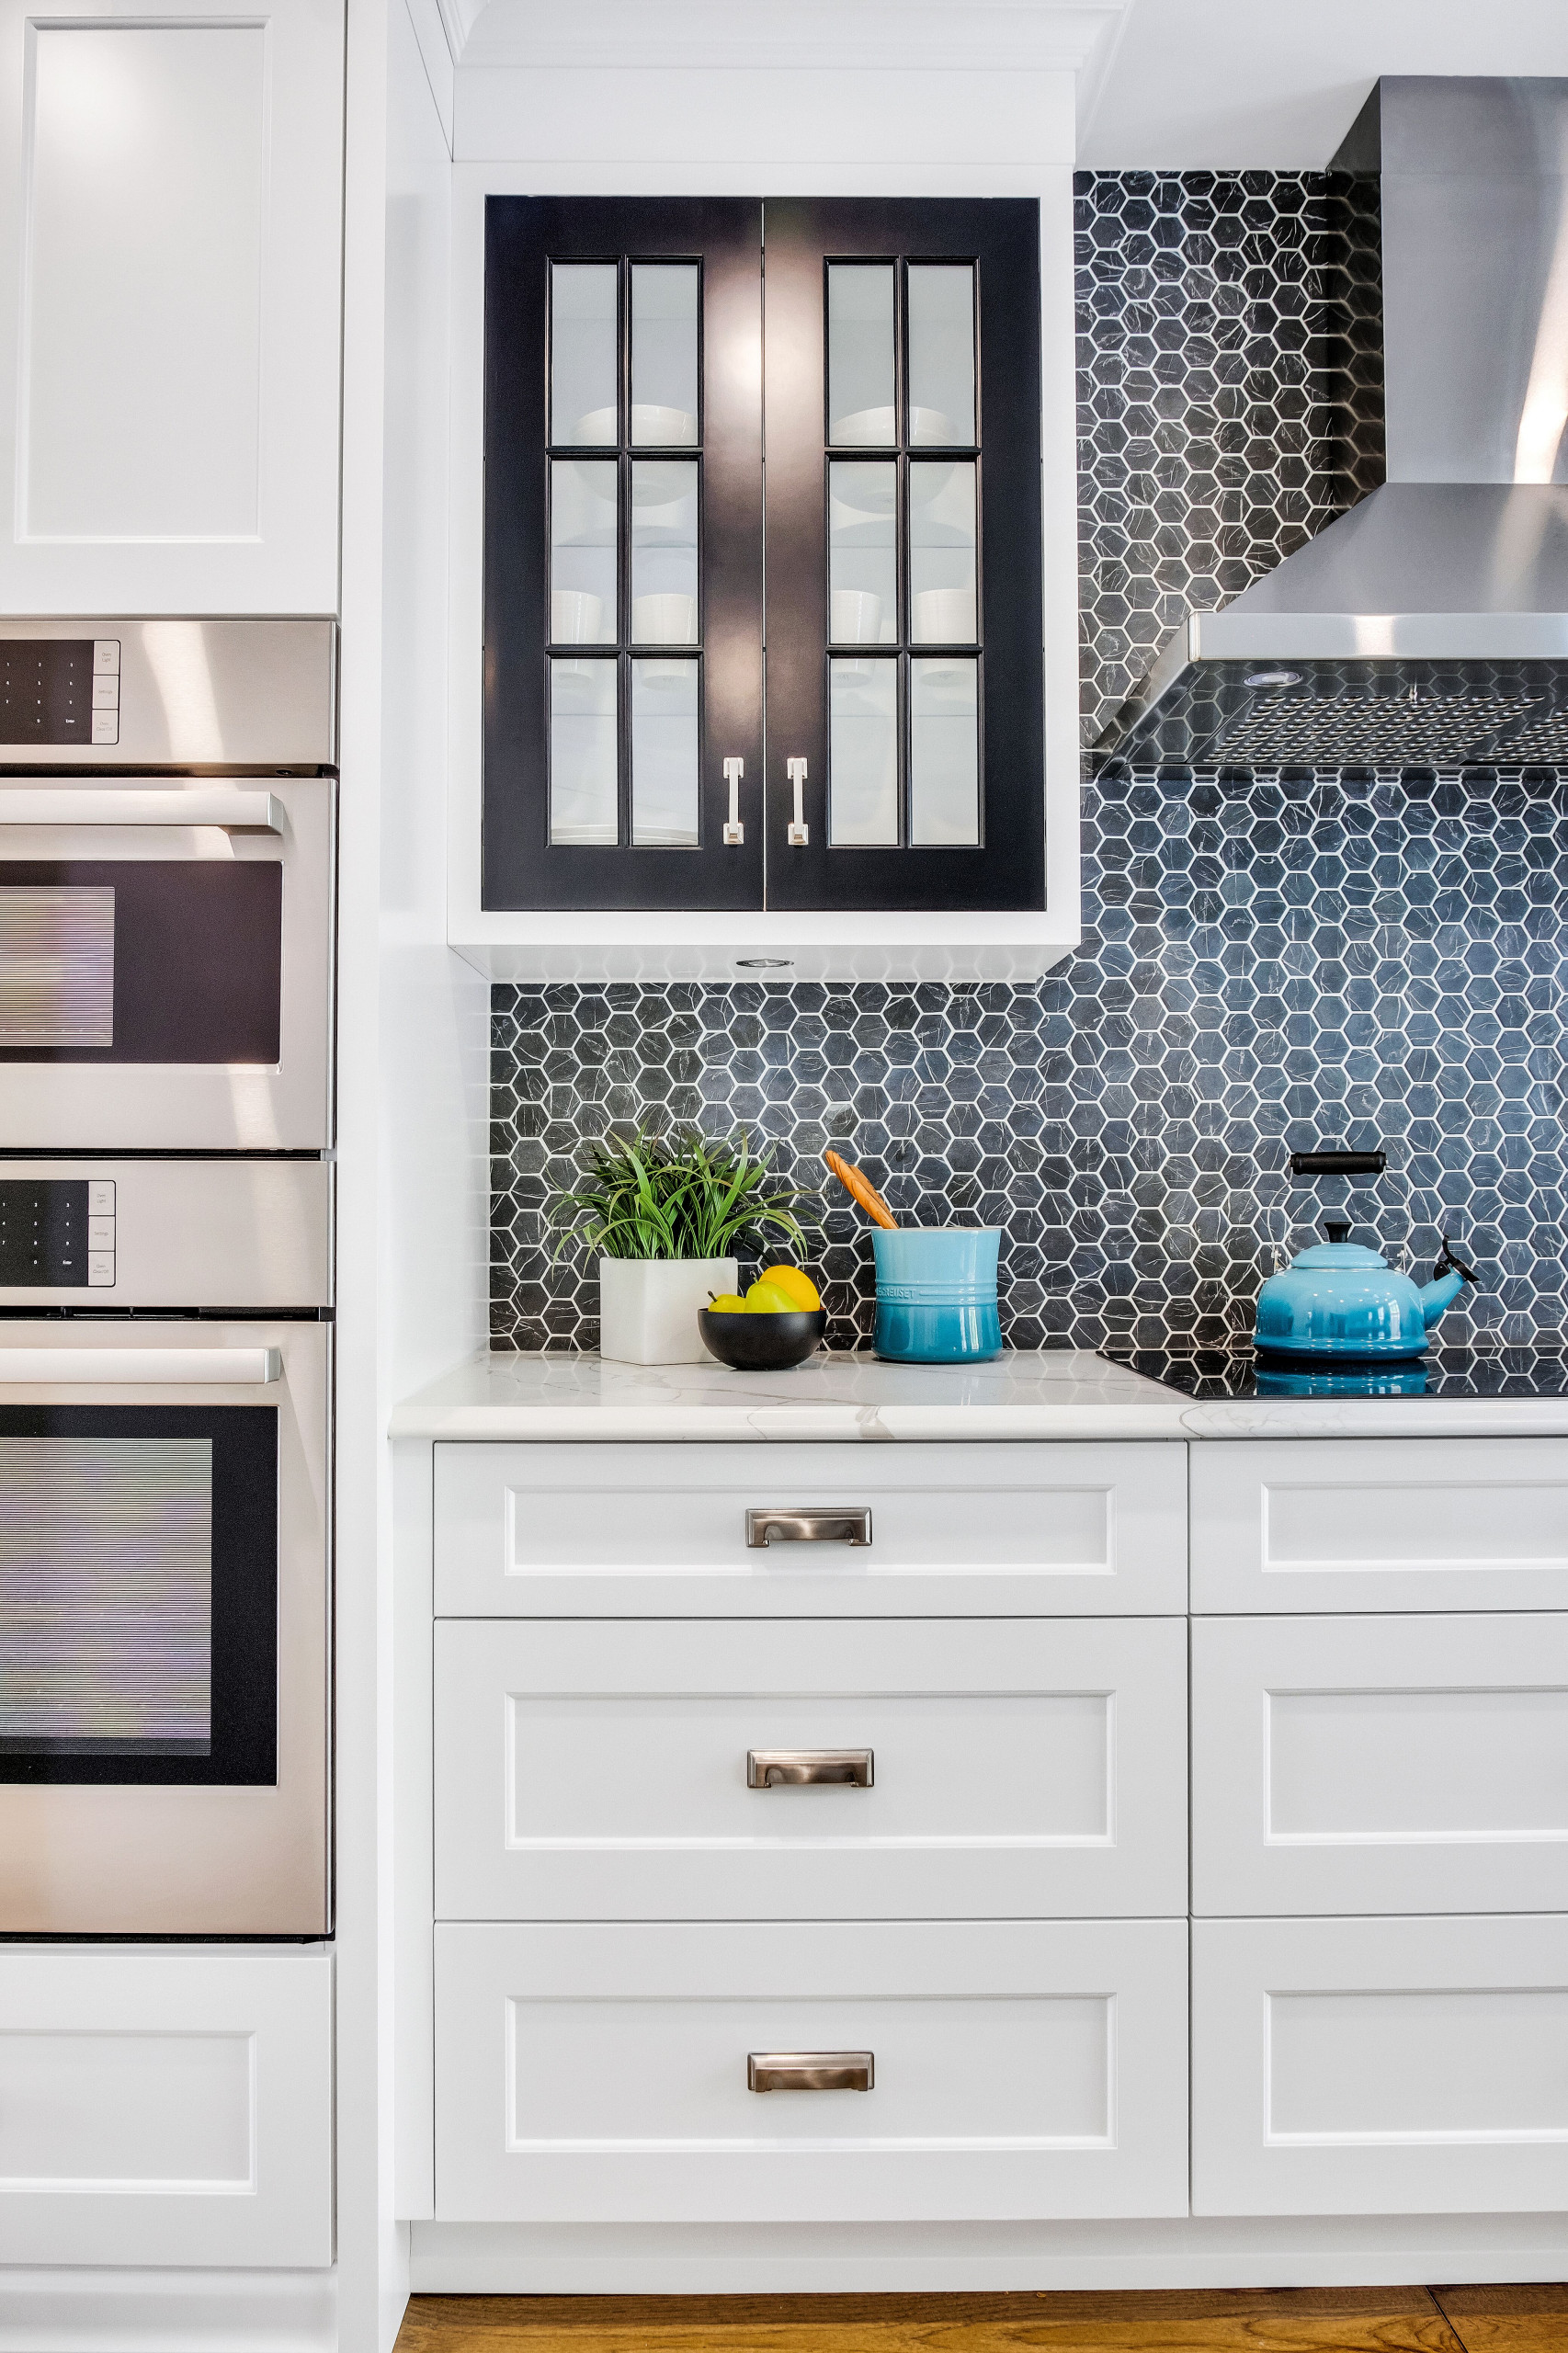 Kitchen Colorful Cabinets Ceramic Tile Backsplashes Design Photos and Ideas  - Dwell